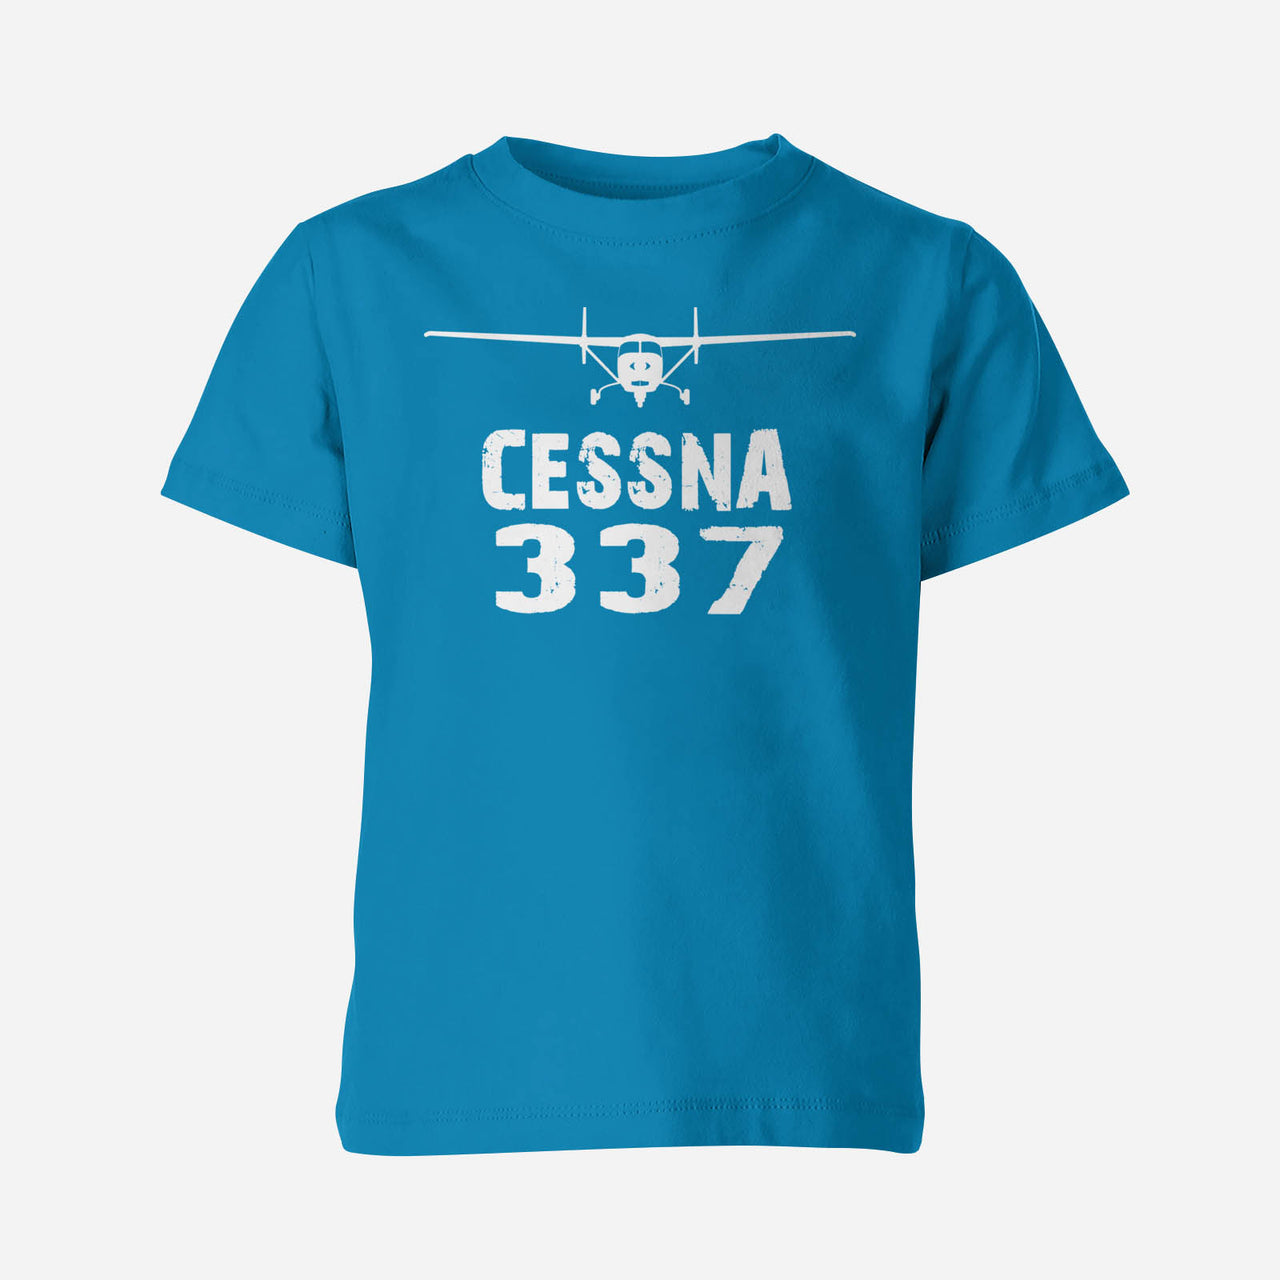 Cessna 337 & Plane Designed Children T-Shirts